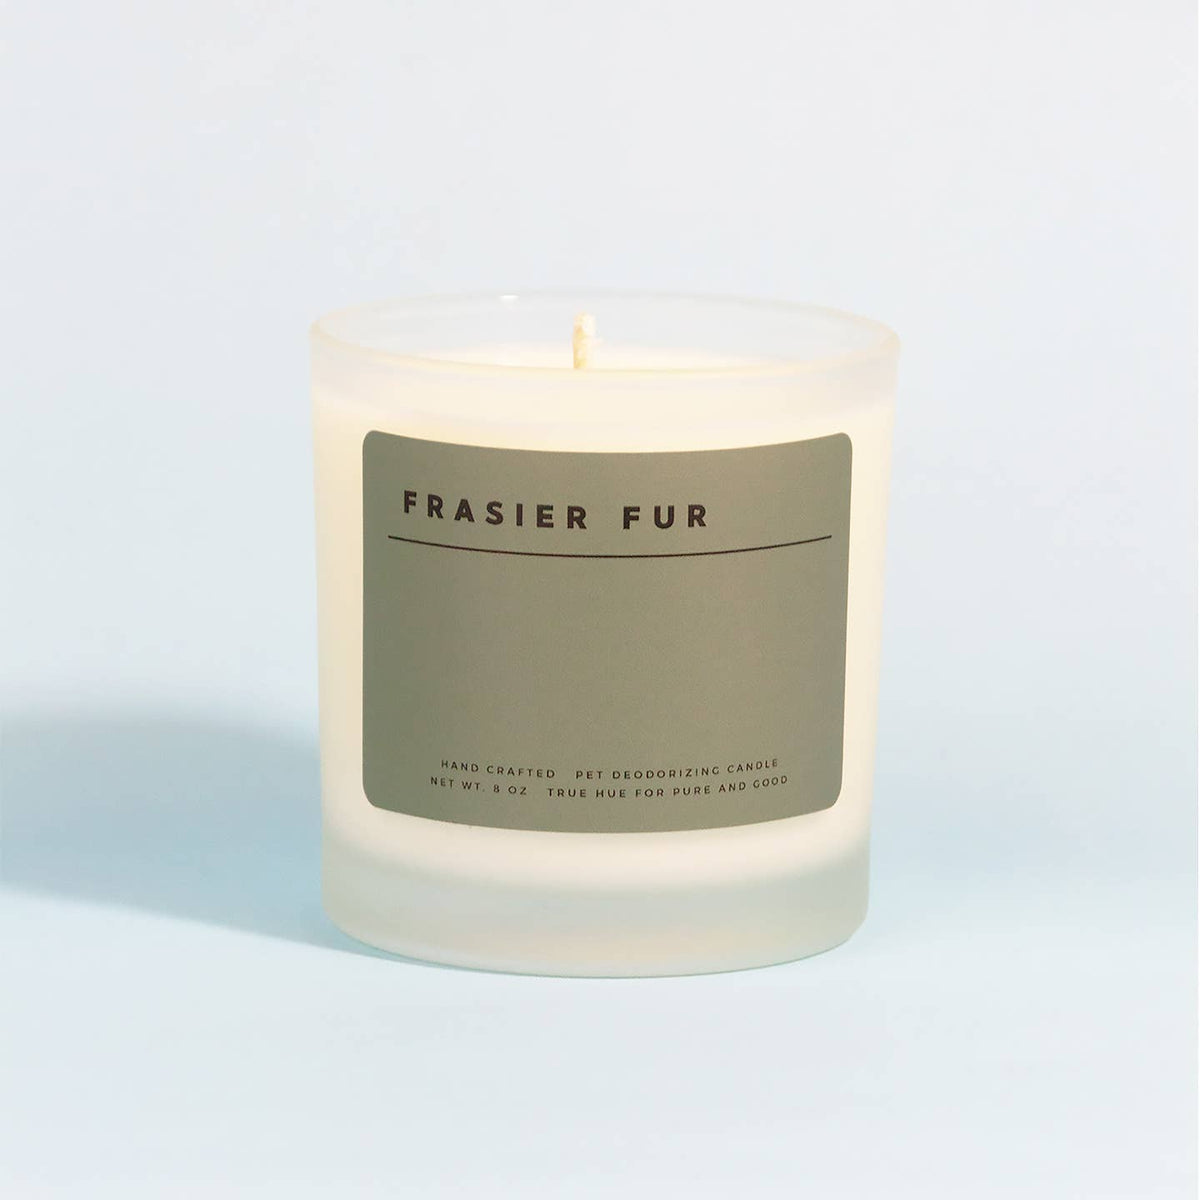 Frasier Fur: Balsam Fir + Pine Needle, Soy Wax Candle